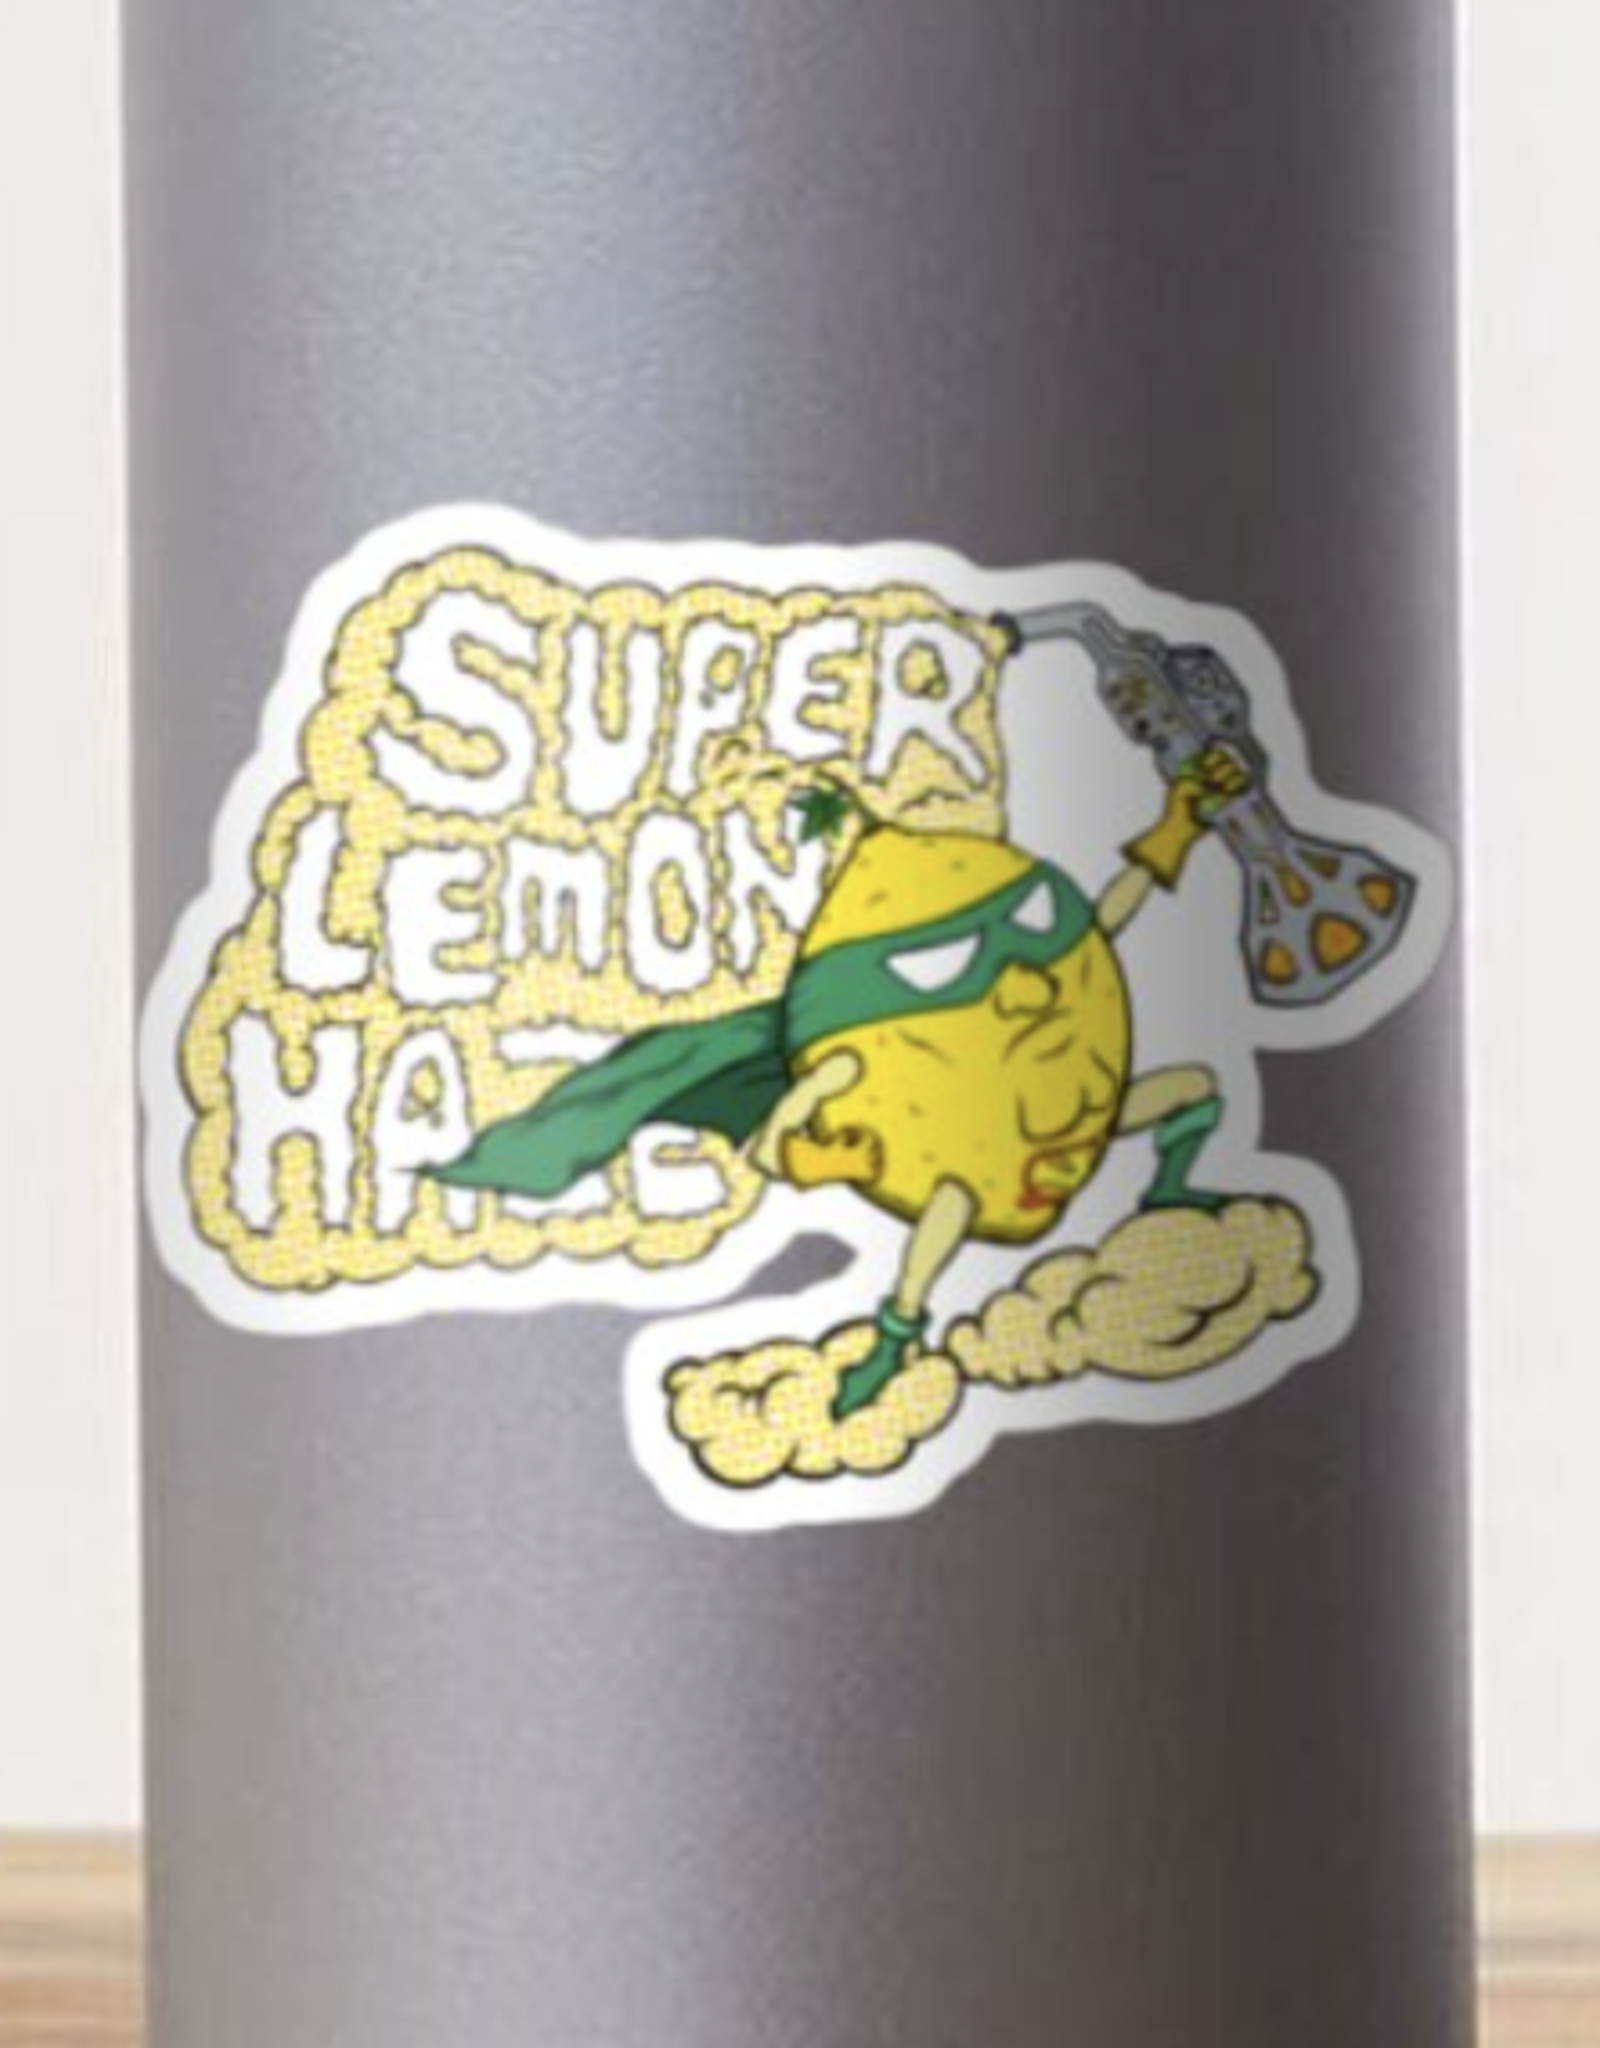 Super Lemon Haze Sticker